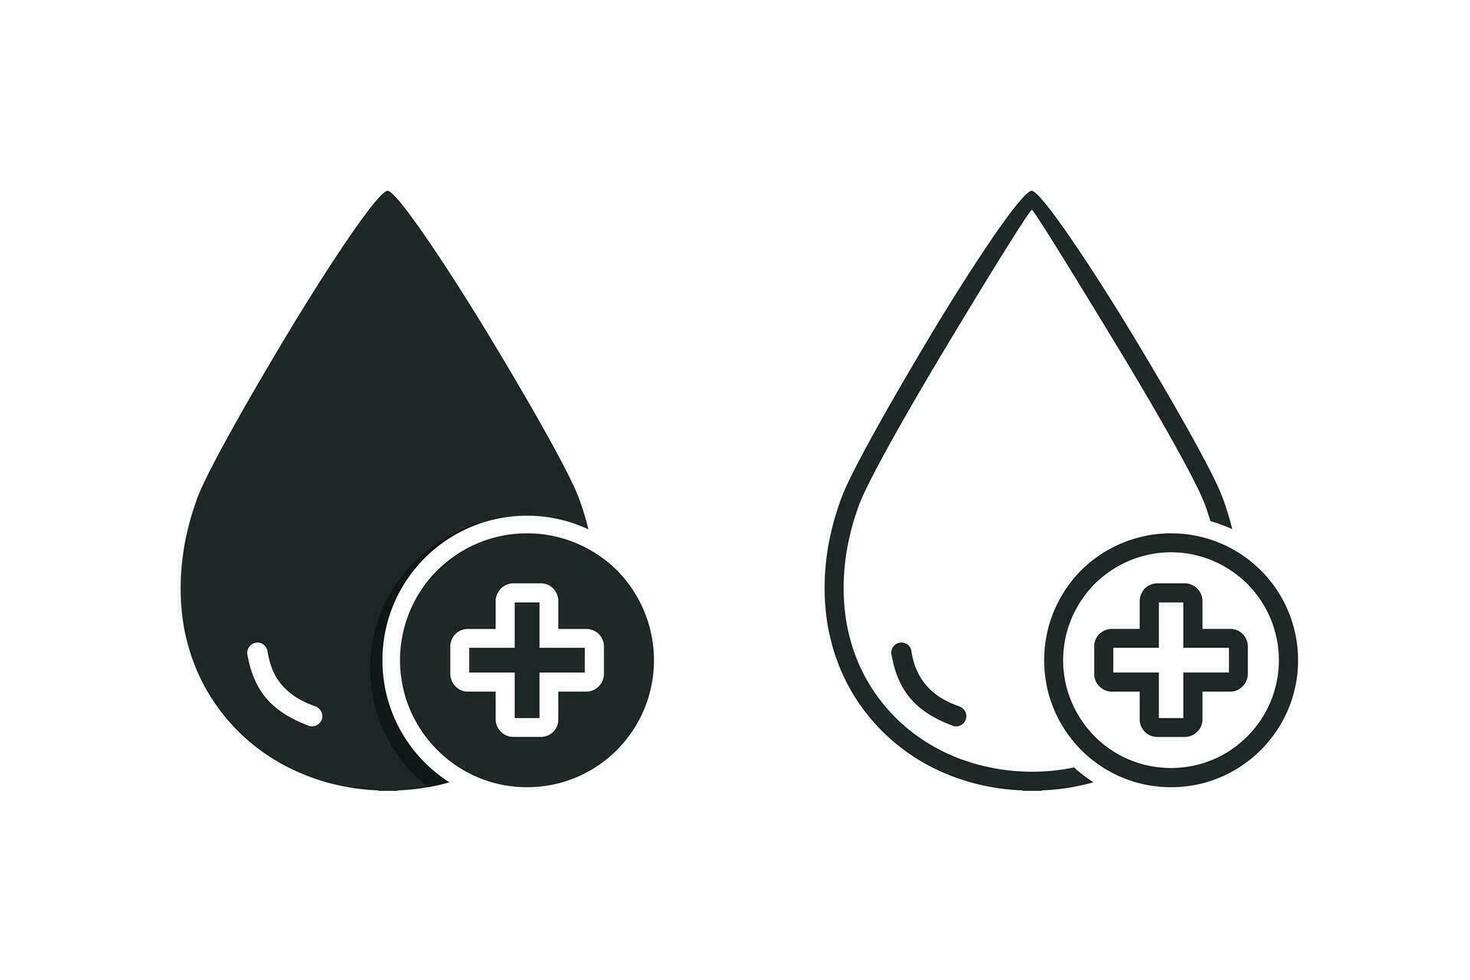 Water healthcare icon. Illustration vector